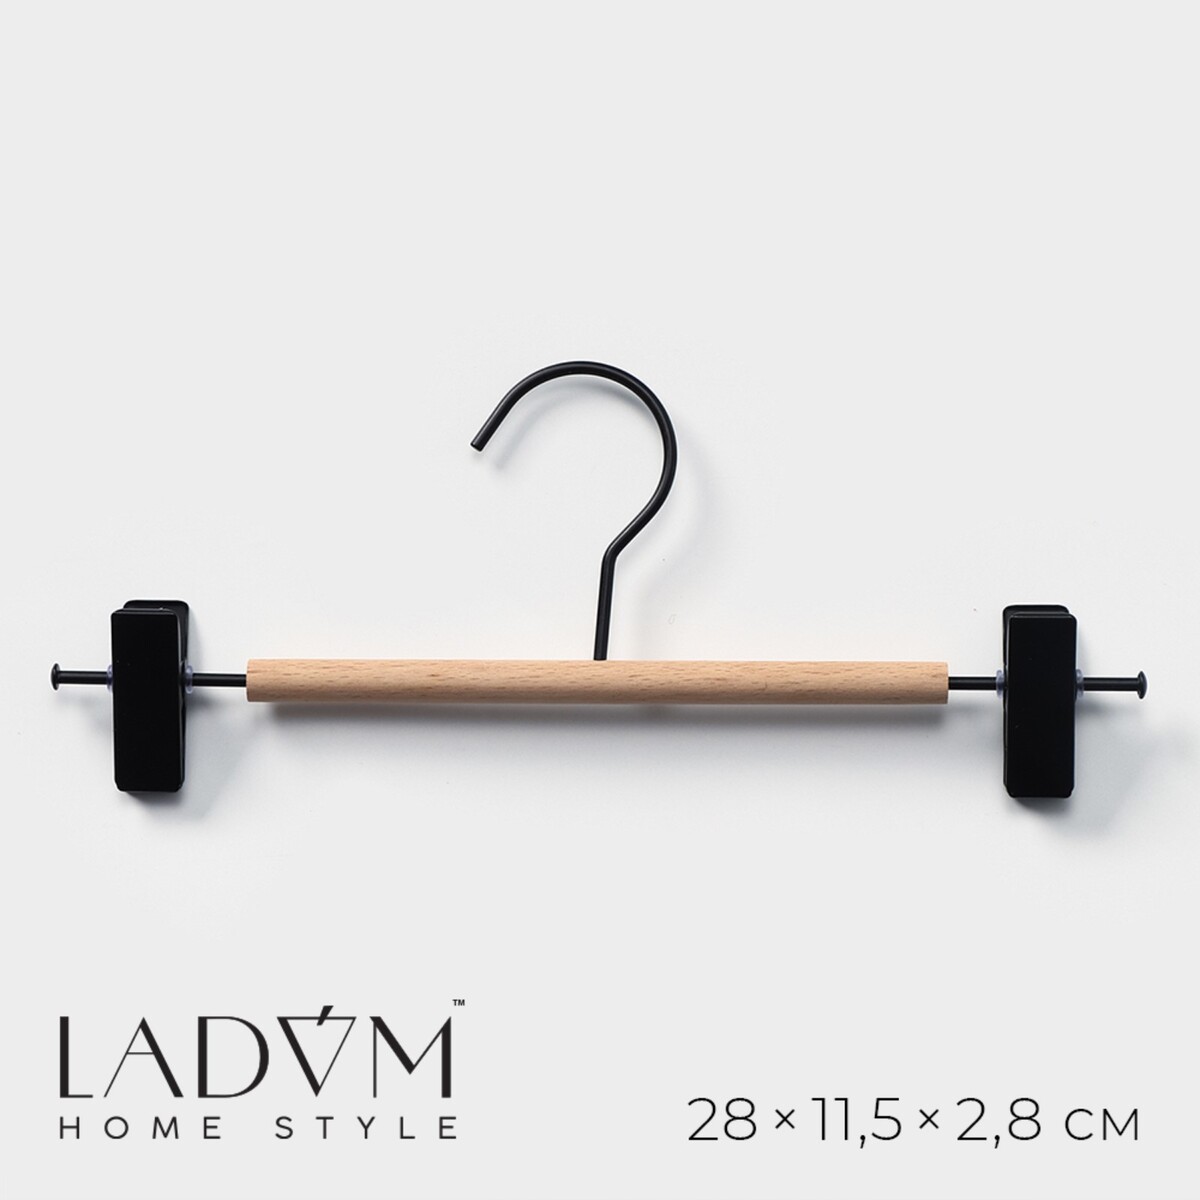 Вешалка для брюк и юбок с зажимами ladо́m laconique, 28×11,5×2,8 см, цвет черный bradex вешалка для брюк 5 в1 гинго